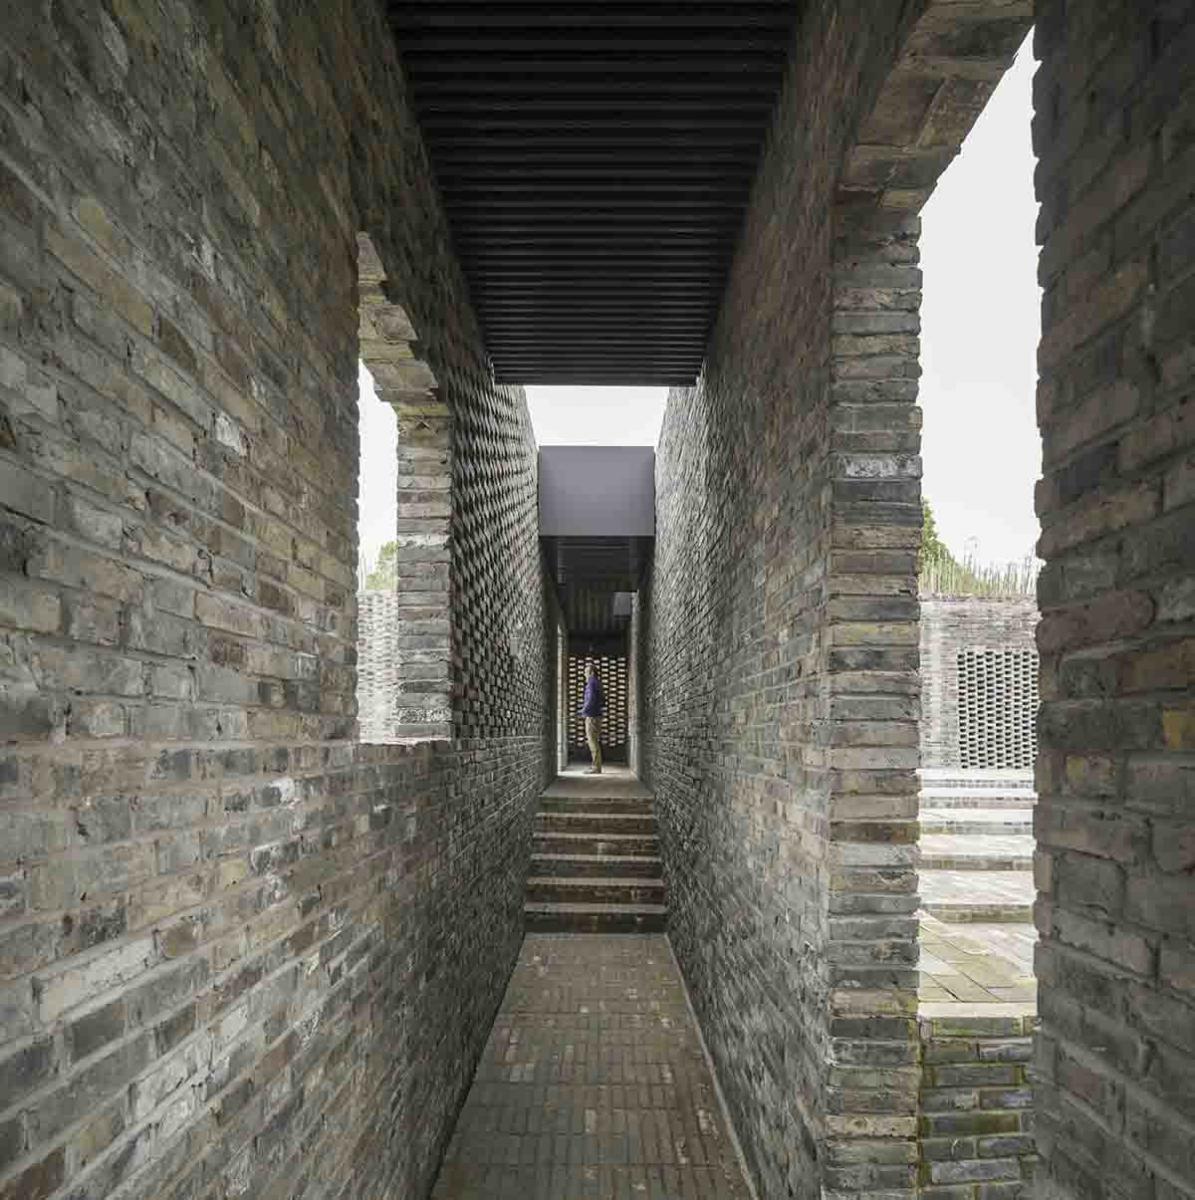 Tsingpu Yangzhou Retreat | Neri & Hu Design and Research office